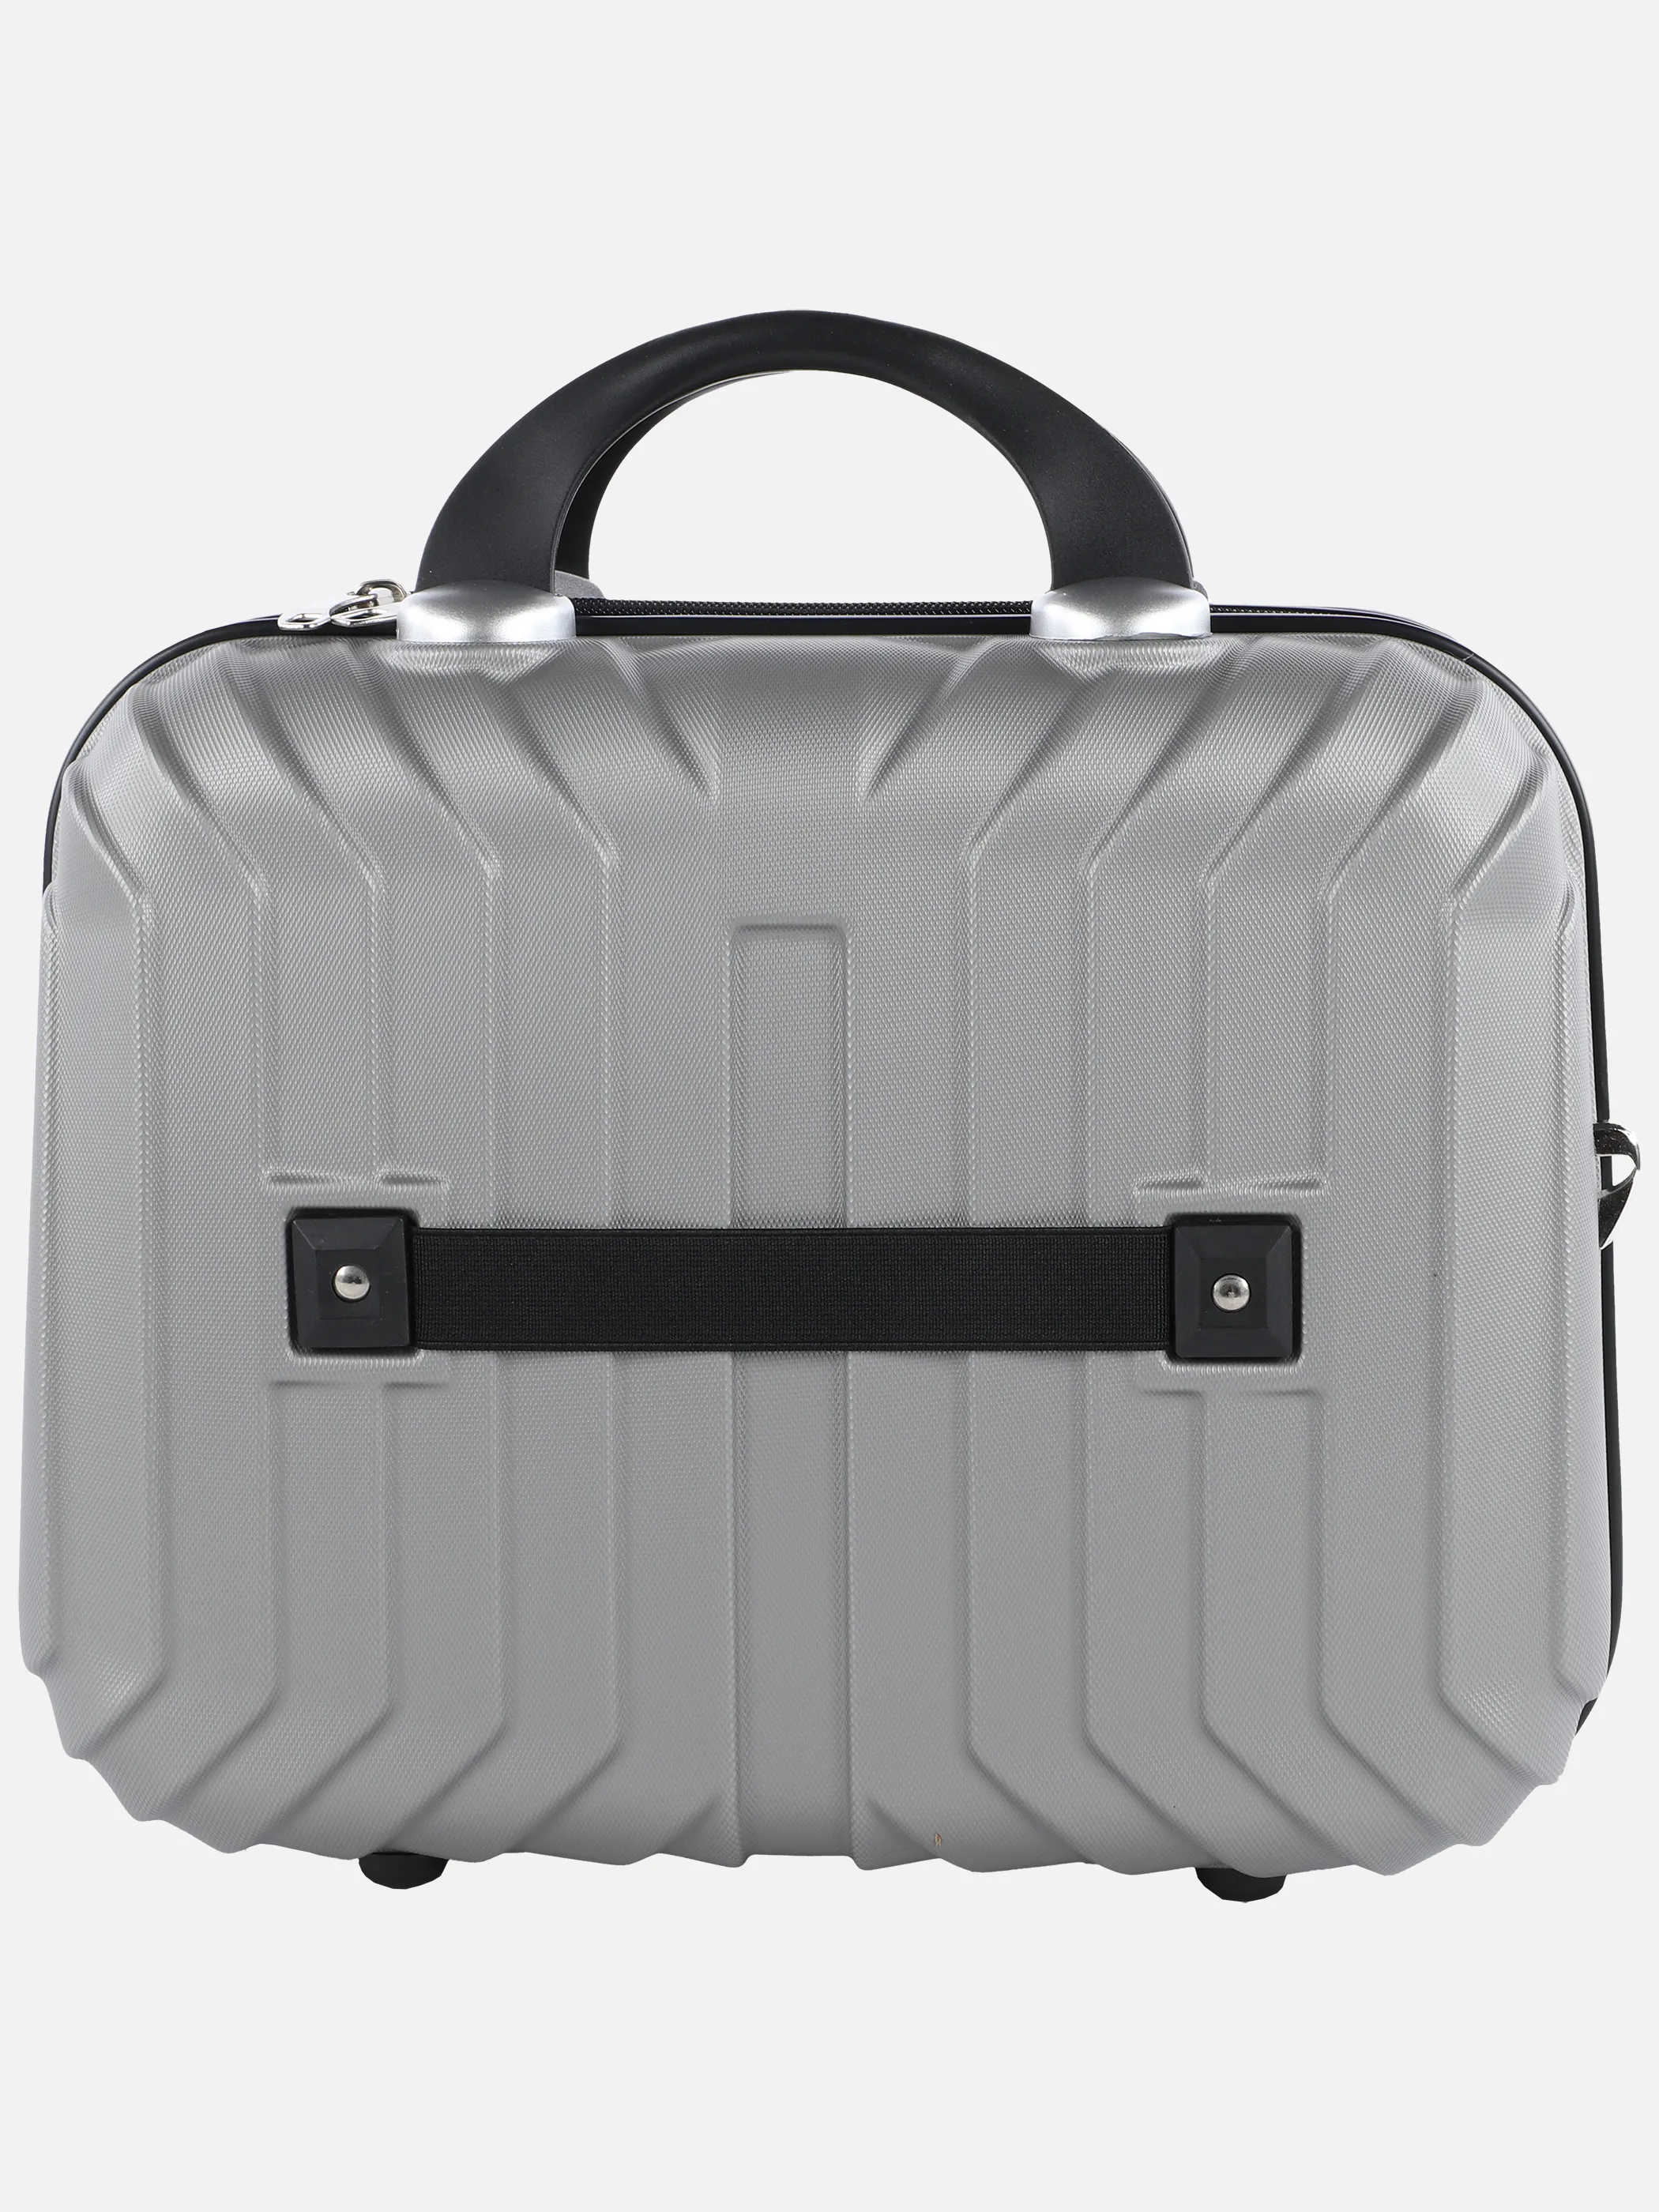 Koffer/Taschen Beautycase Palma Grau 894668 SILBER 2